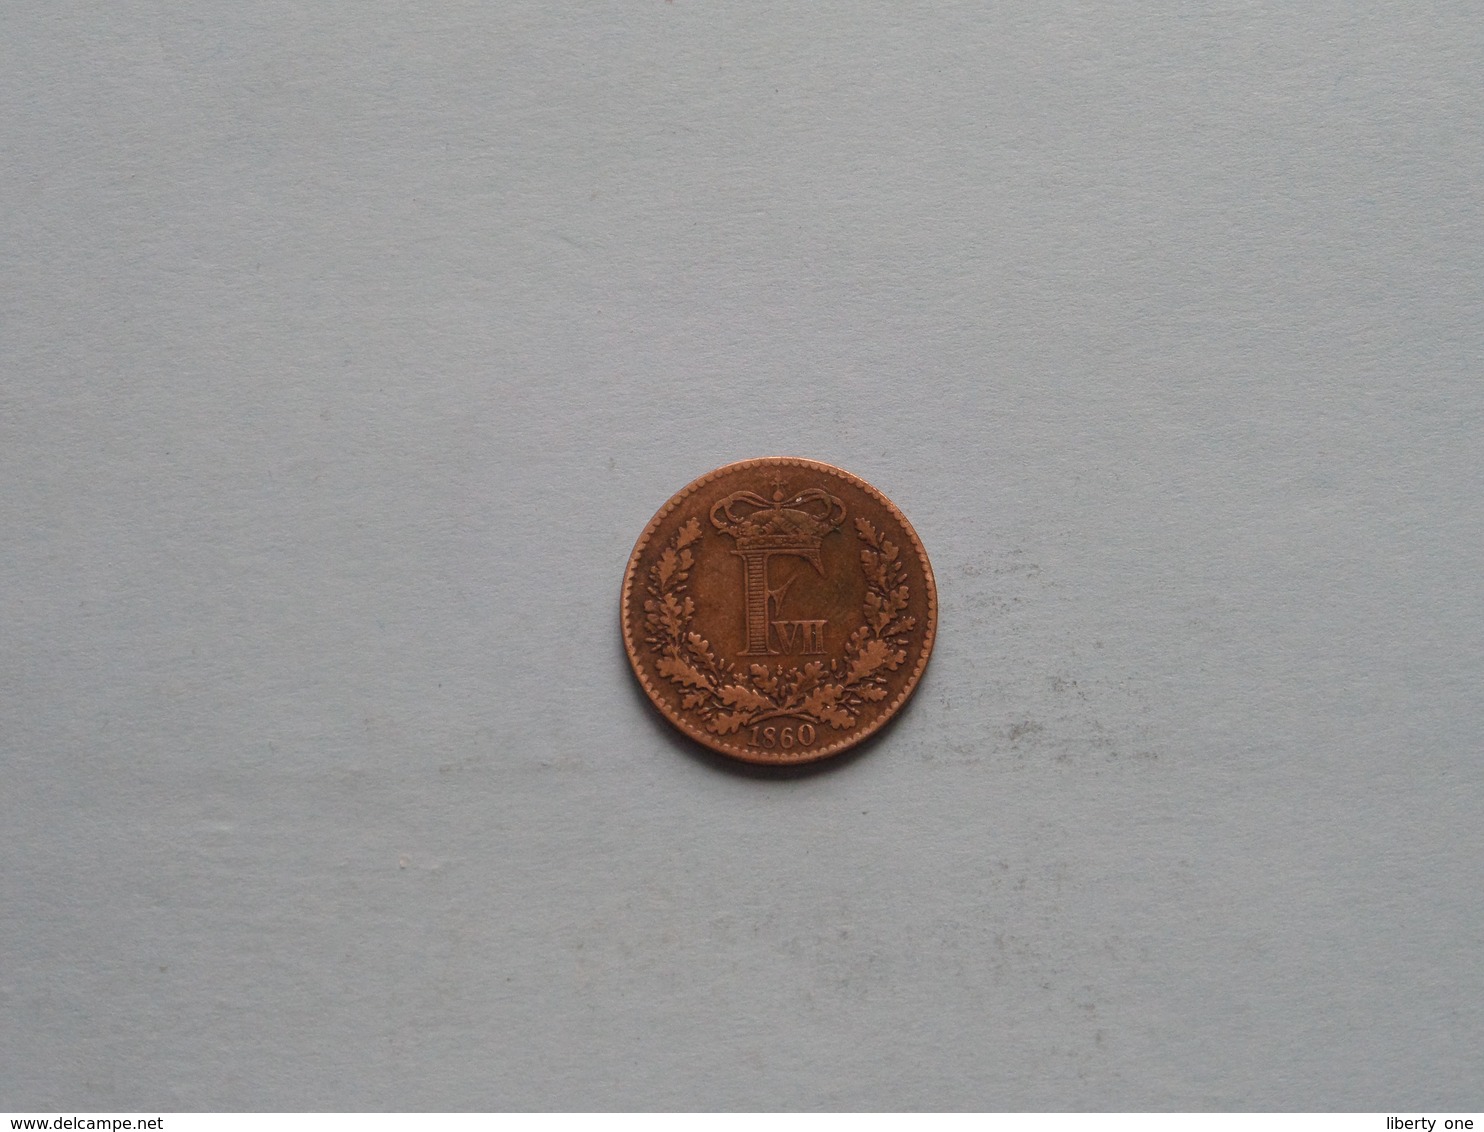 1860 Rigsmont - 1 Skilling / KM 763 ( Uncleaned Coin - For Grade, Please See Photo ) !! - Denmark